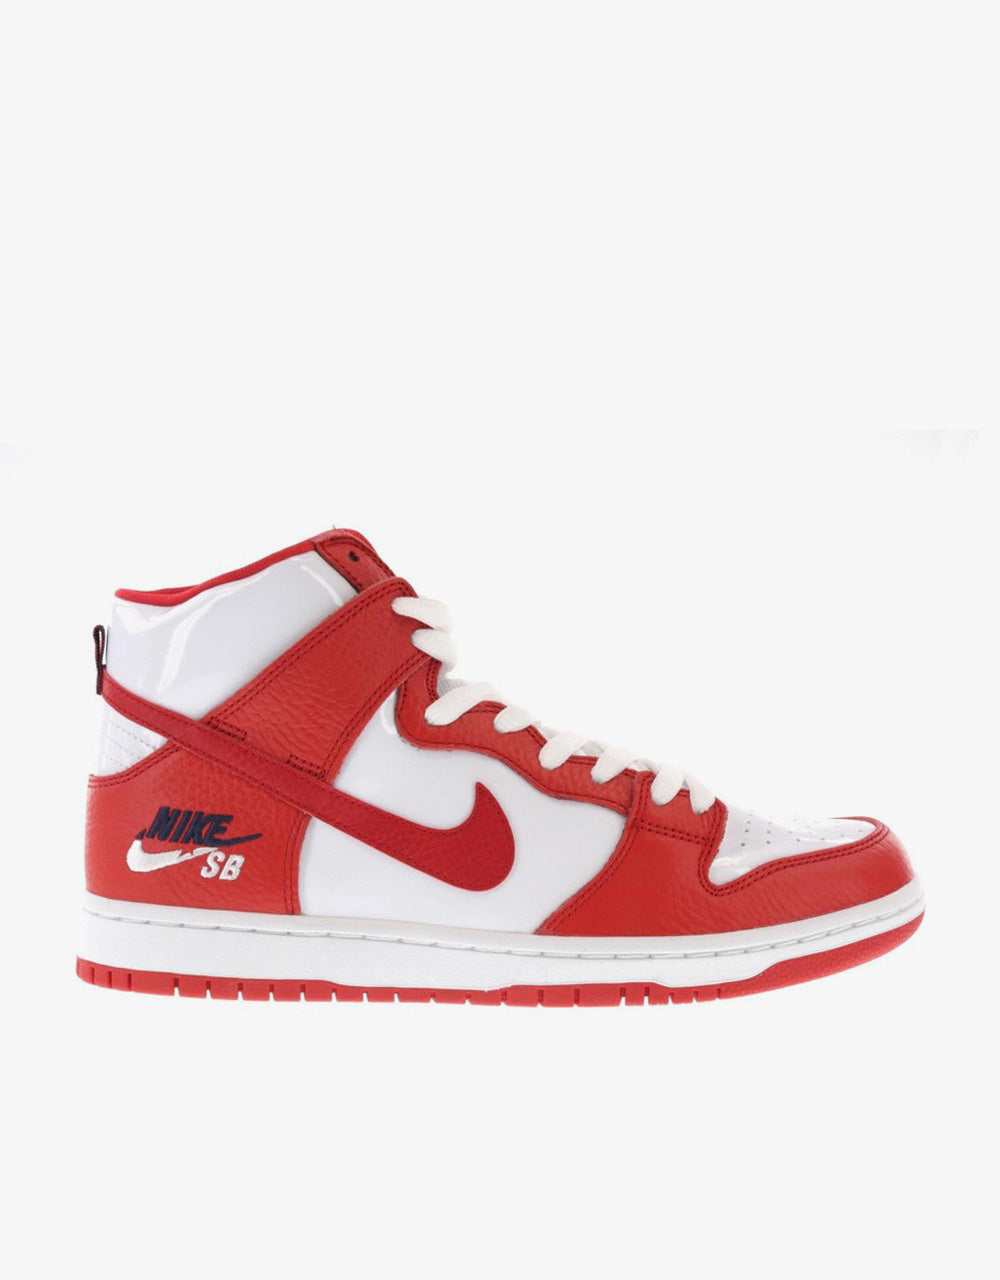 Nike SB Zoom Dunk High Pro Skate Shoes - University Red/Uni Red-White